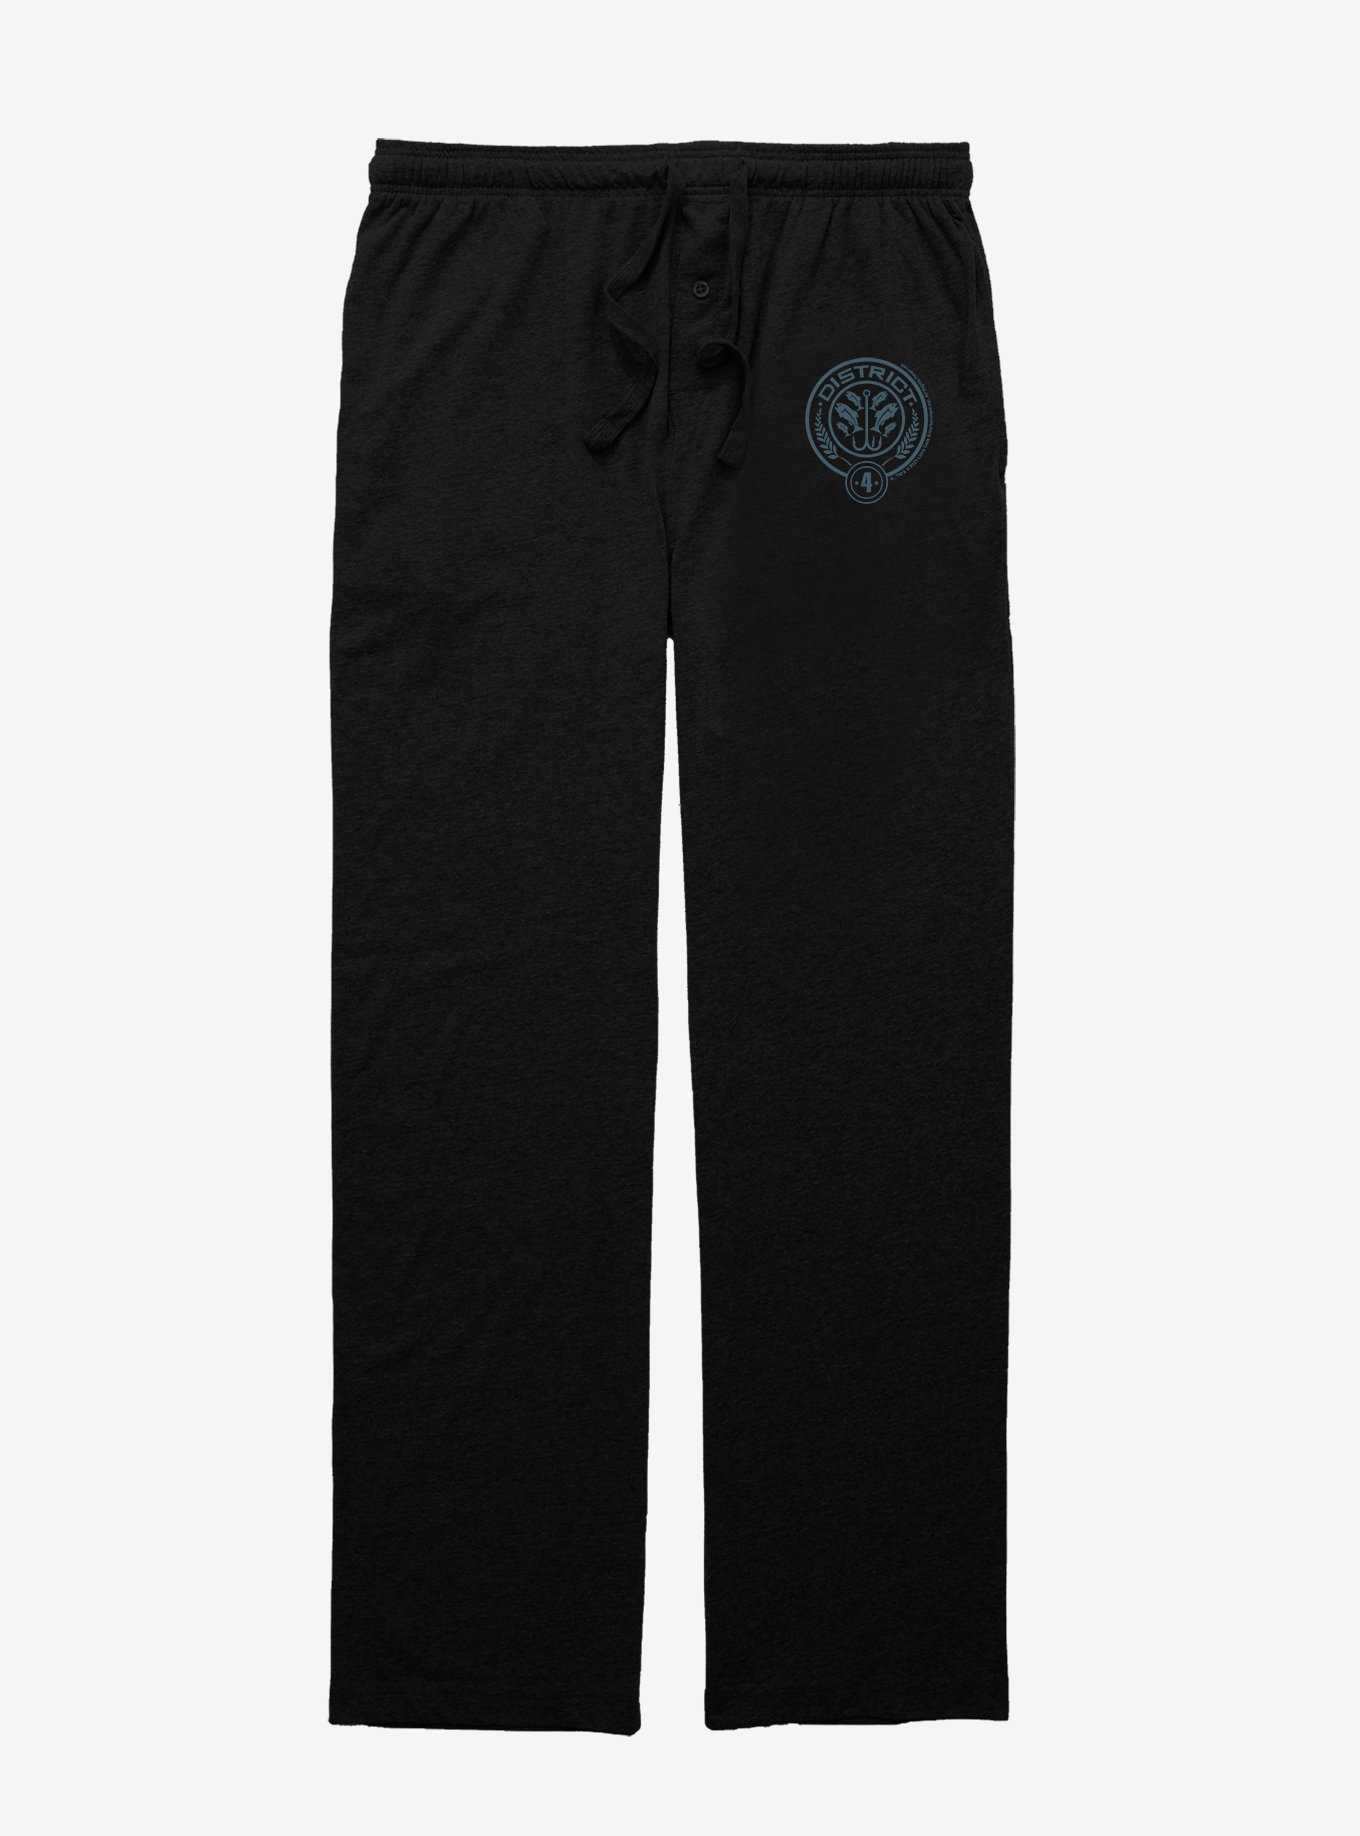 Hunger Games District 4 Emblem Pajama Pants, , hi-res